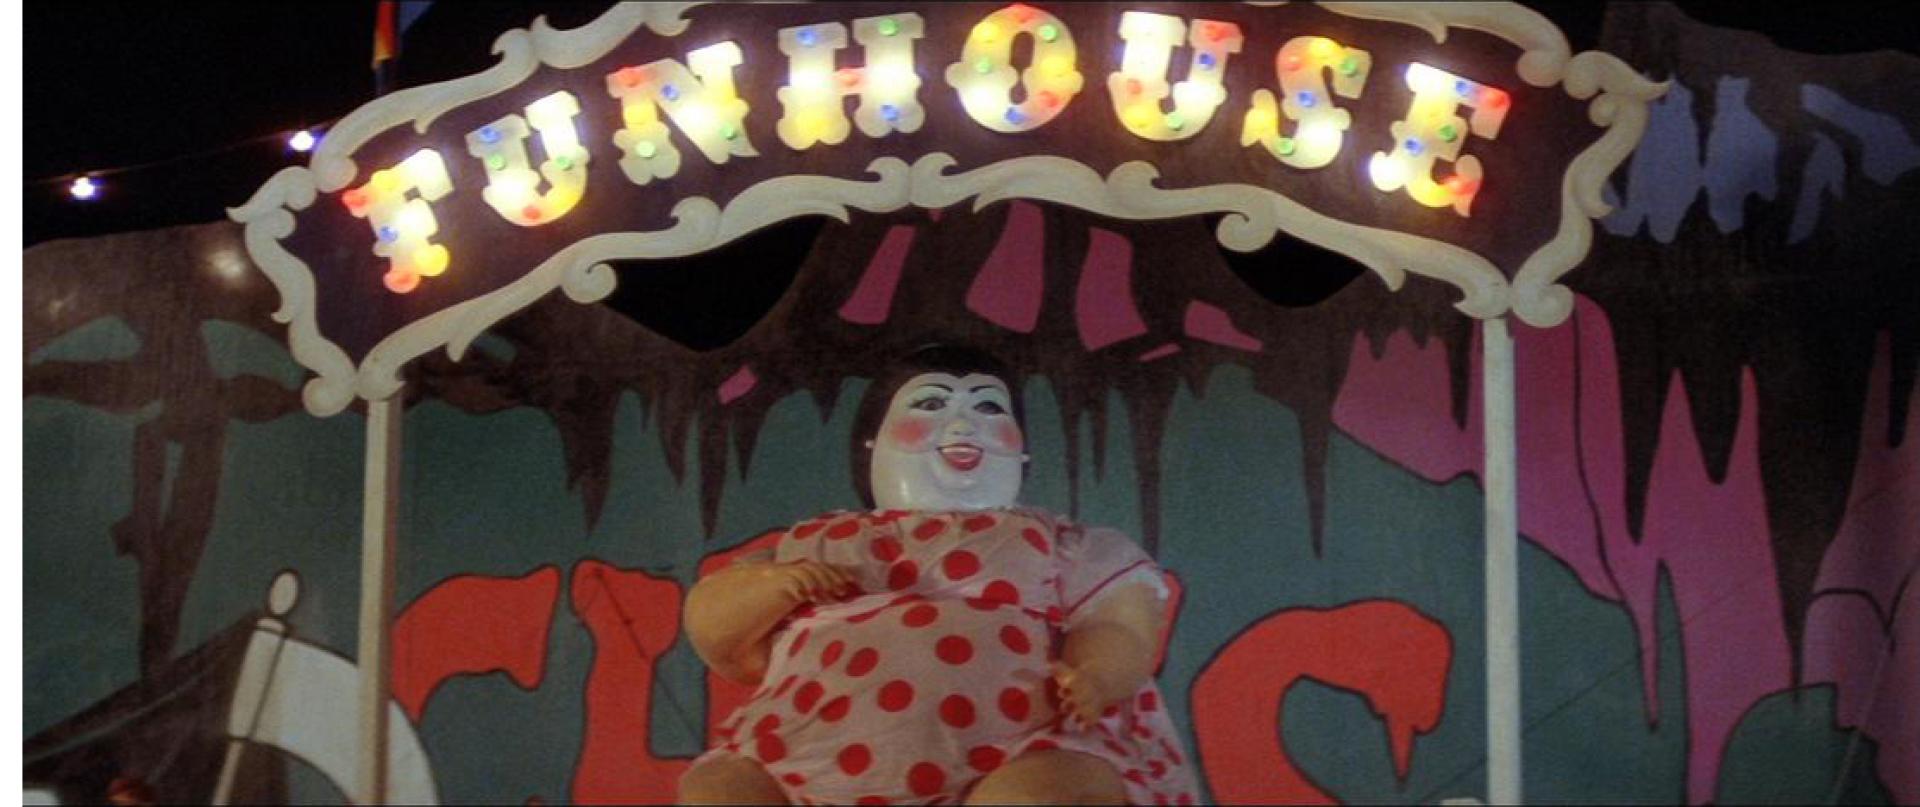 The Funhouse (1981)